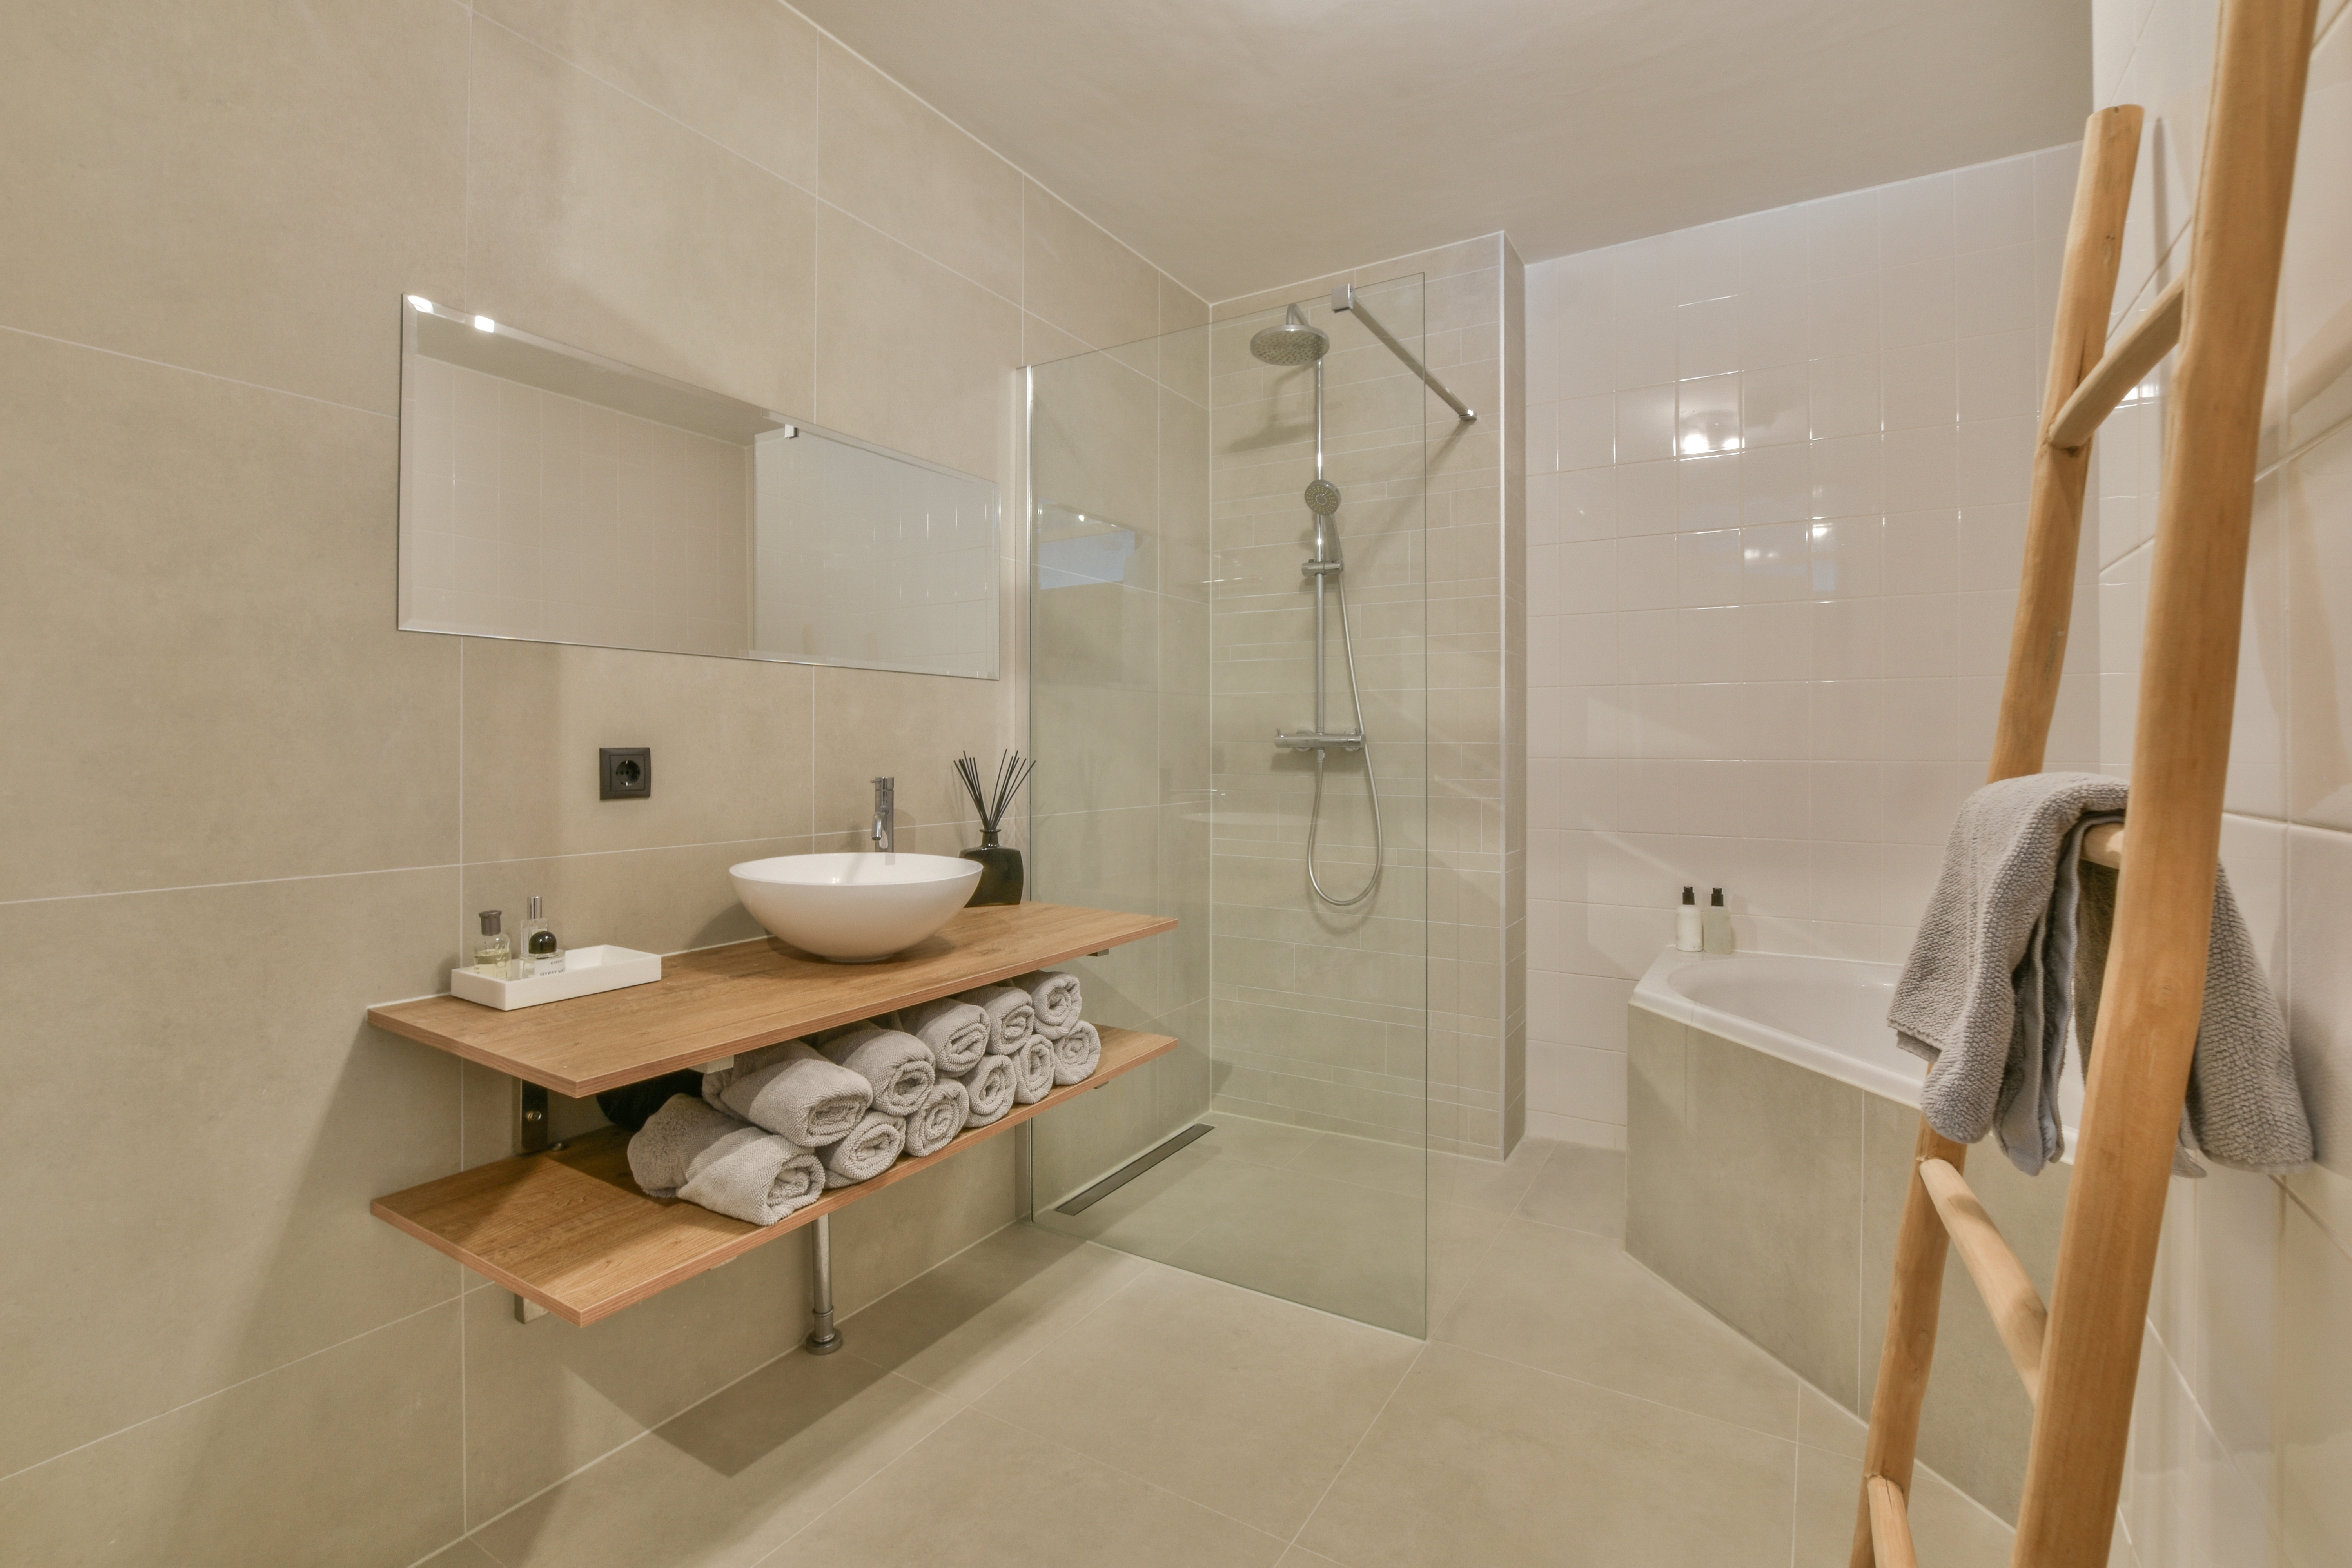 Elegant bathroom. | Source: Shutterstock